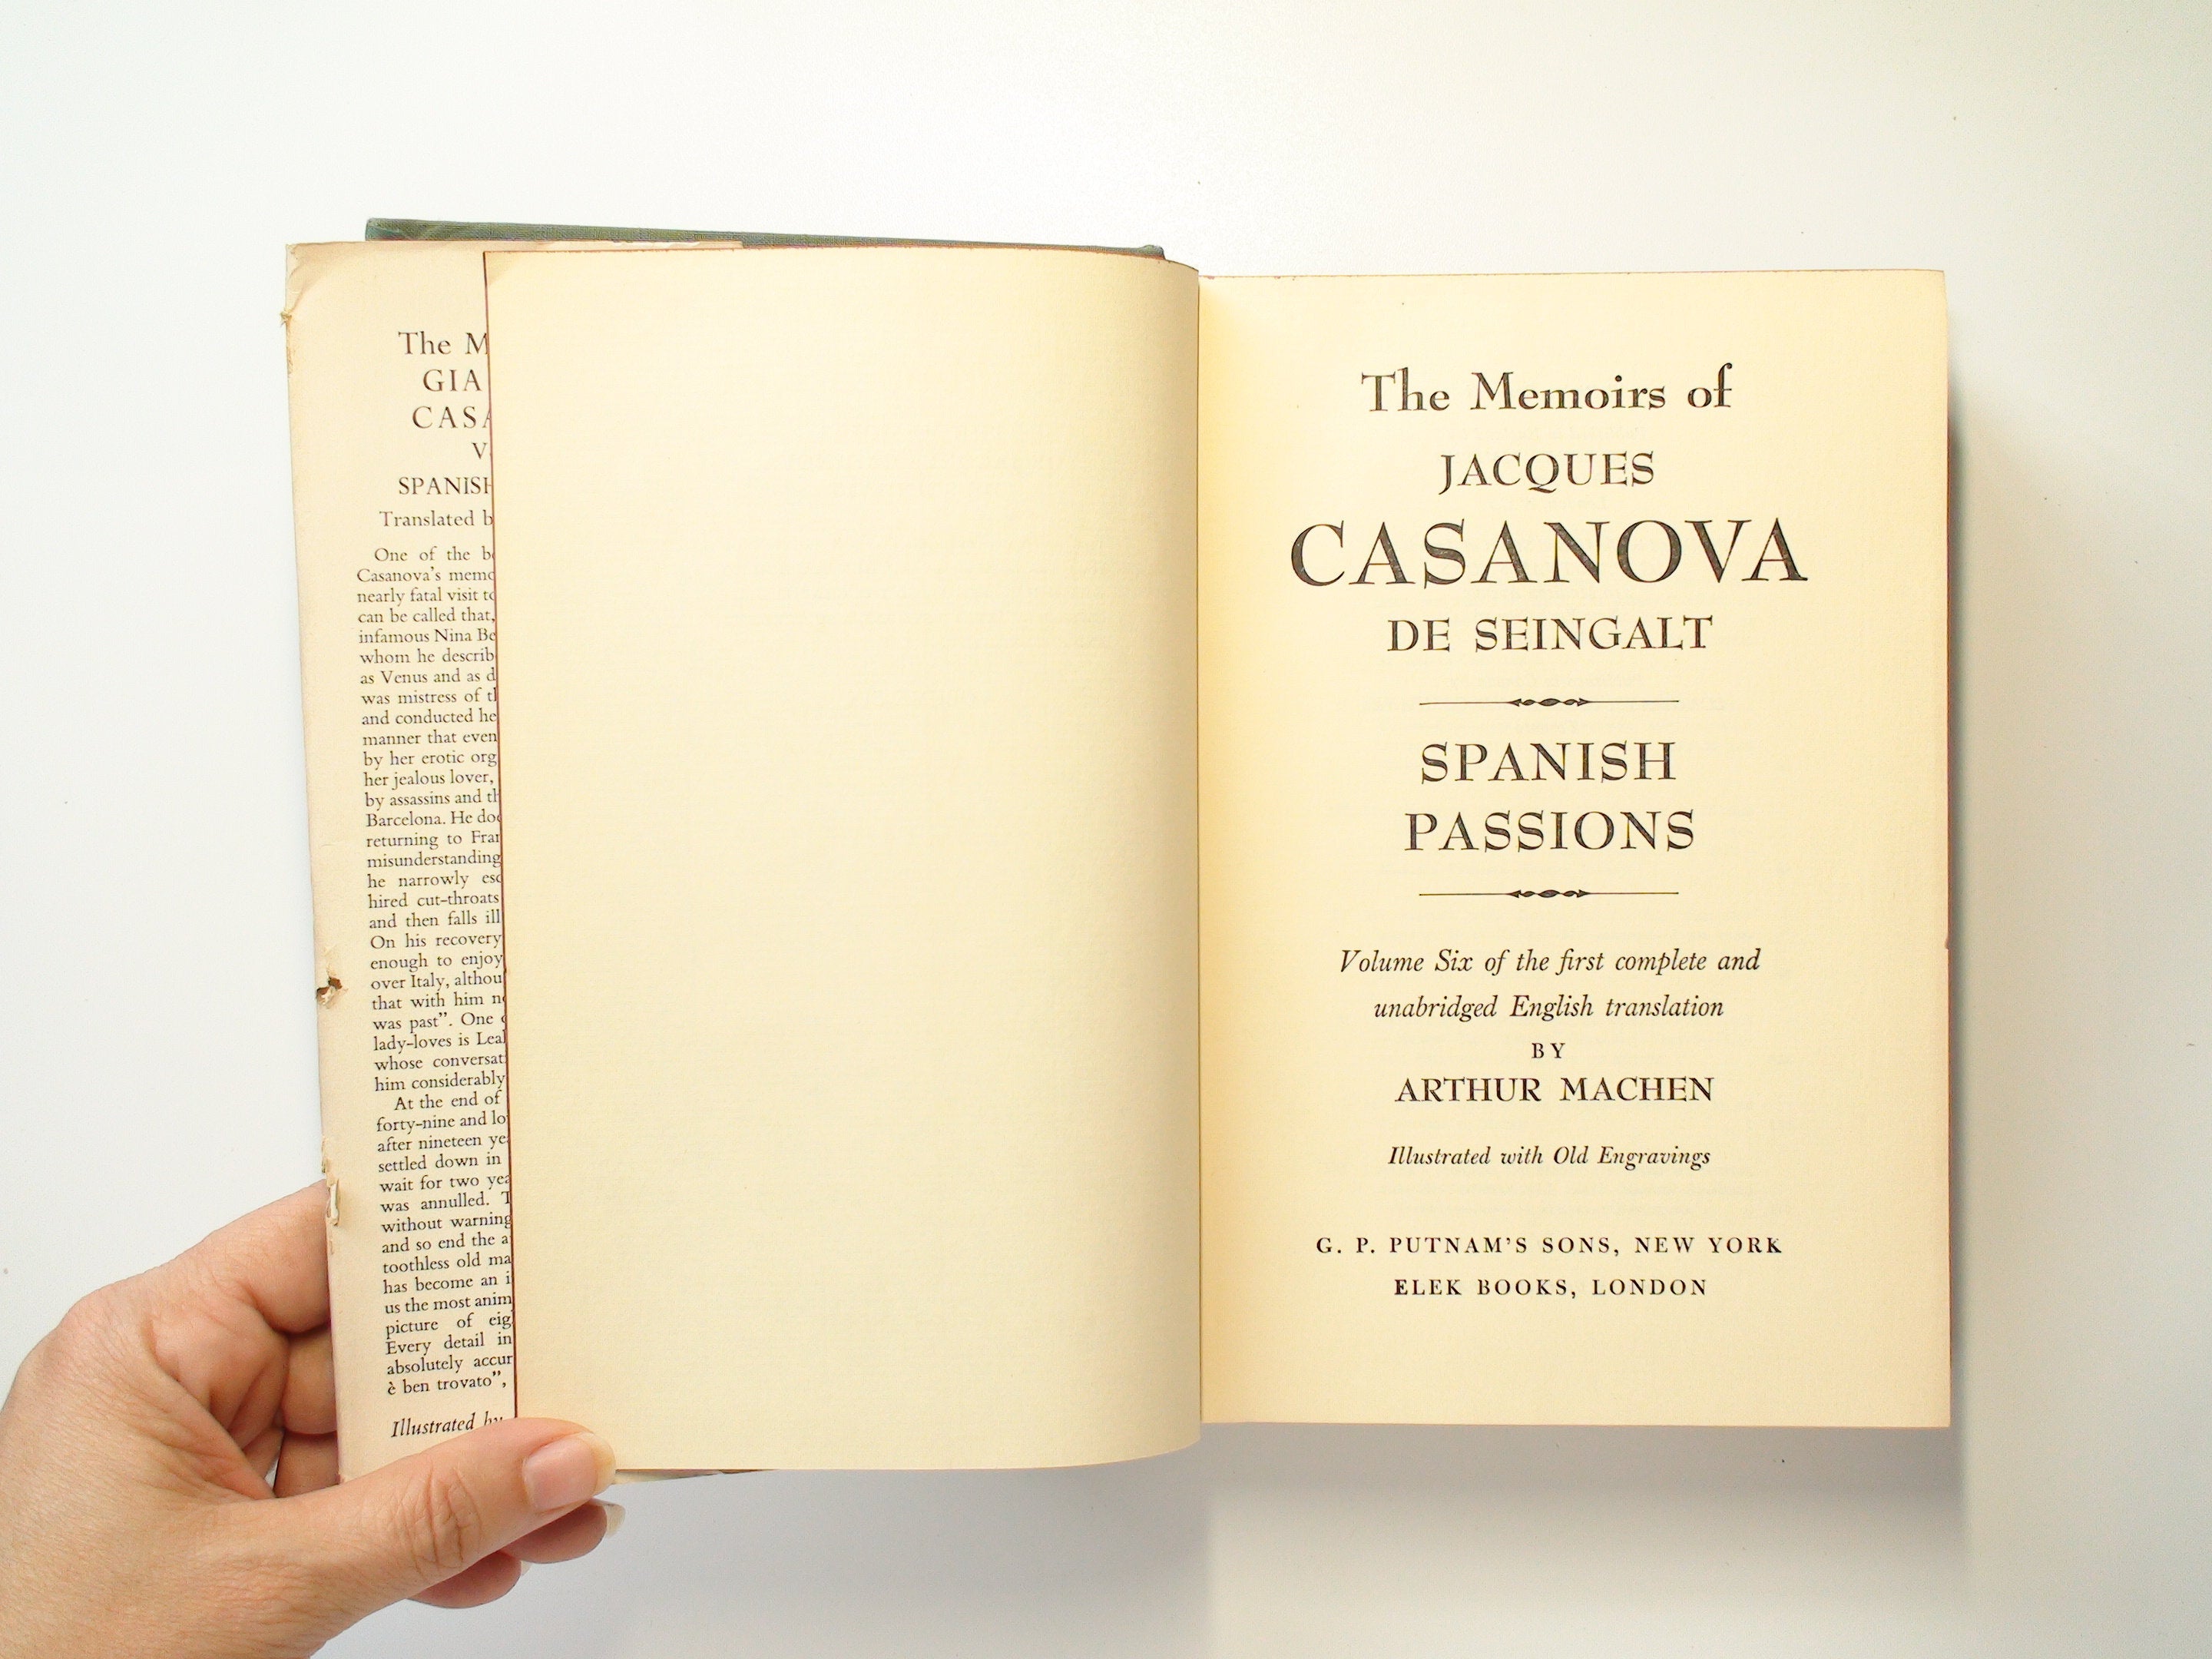 Memoirs of Jacques Casanova, Spanish Passions, Vol 6, Arthur Machen, 1947